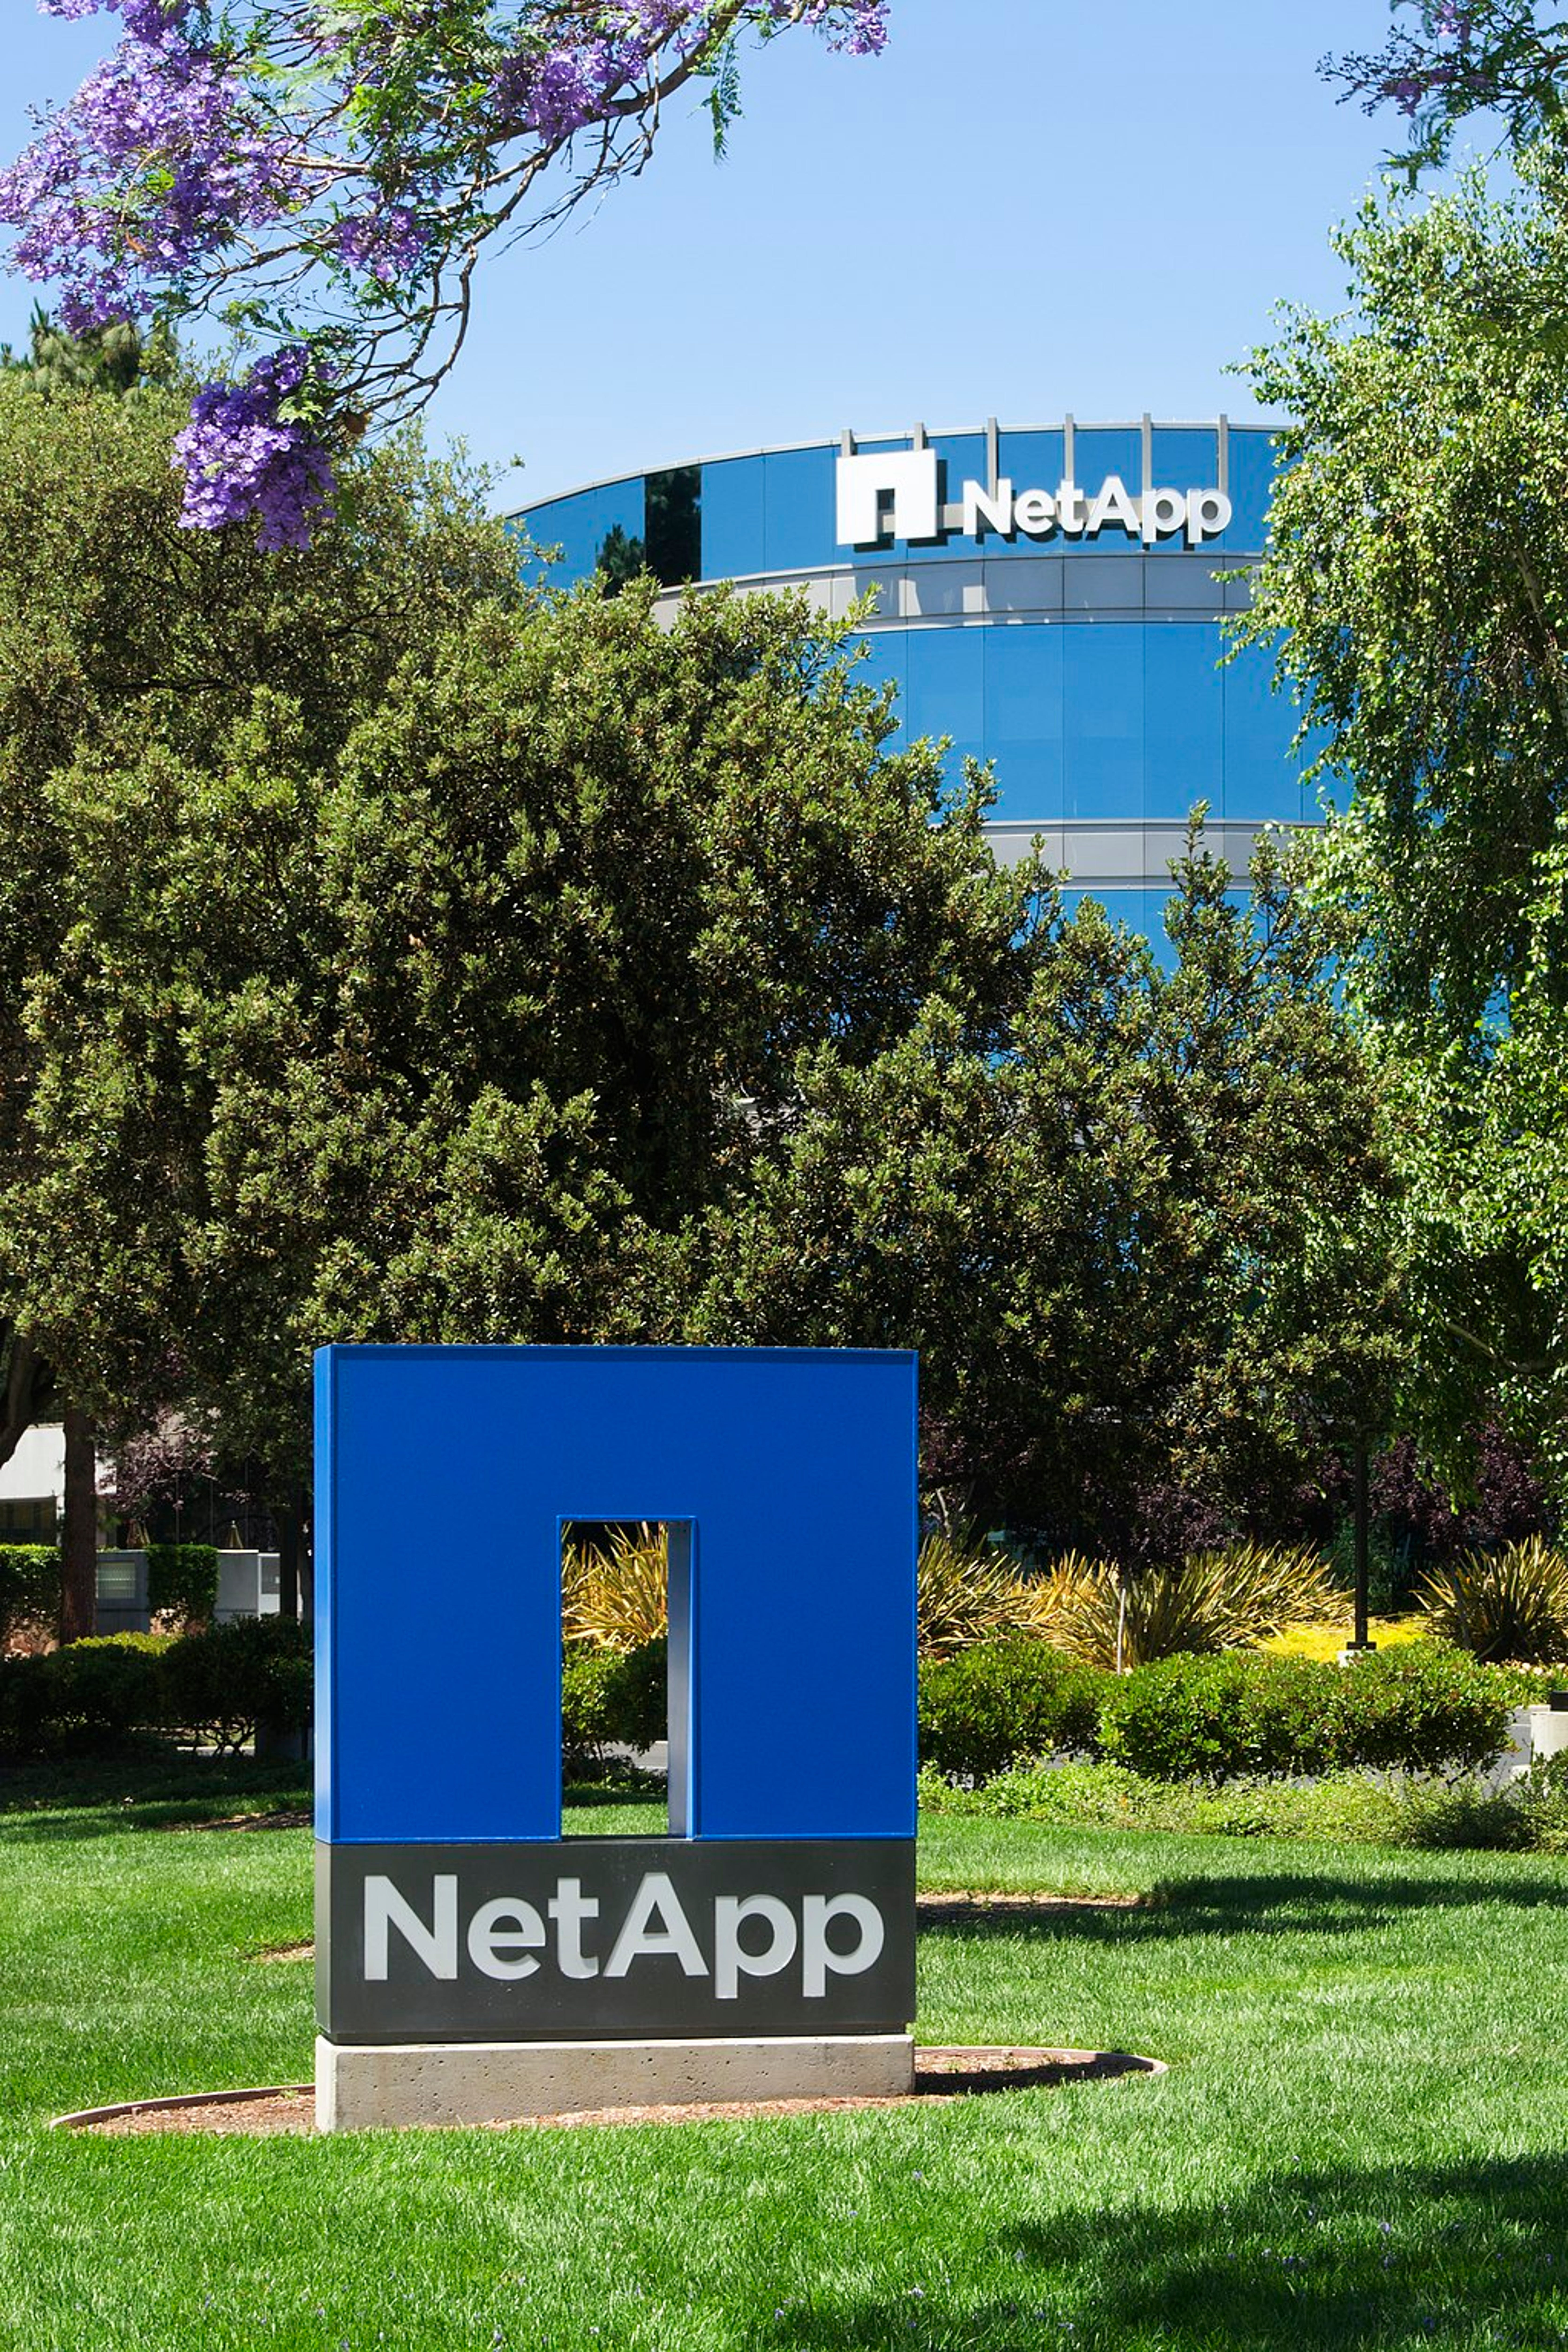 NetApp Q1 Performance Beats Expectations, Issues Upbeat Q2 Outlook